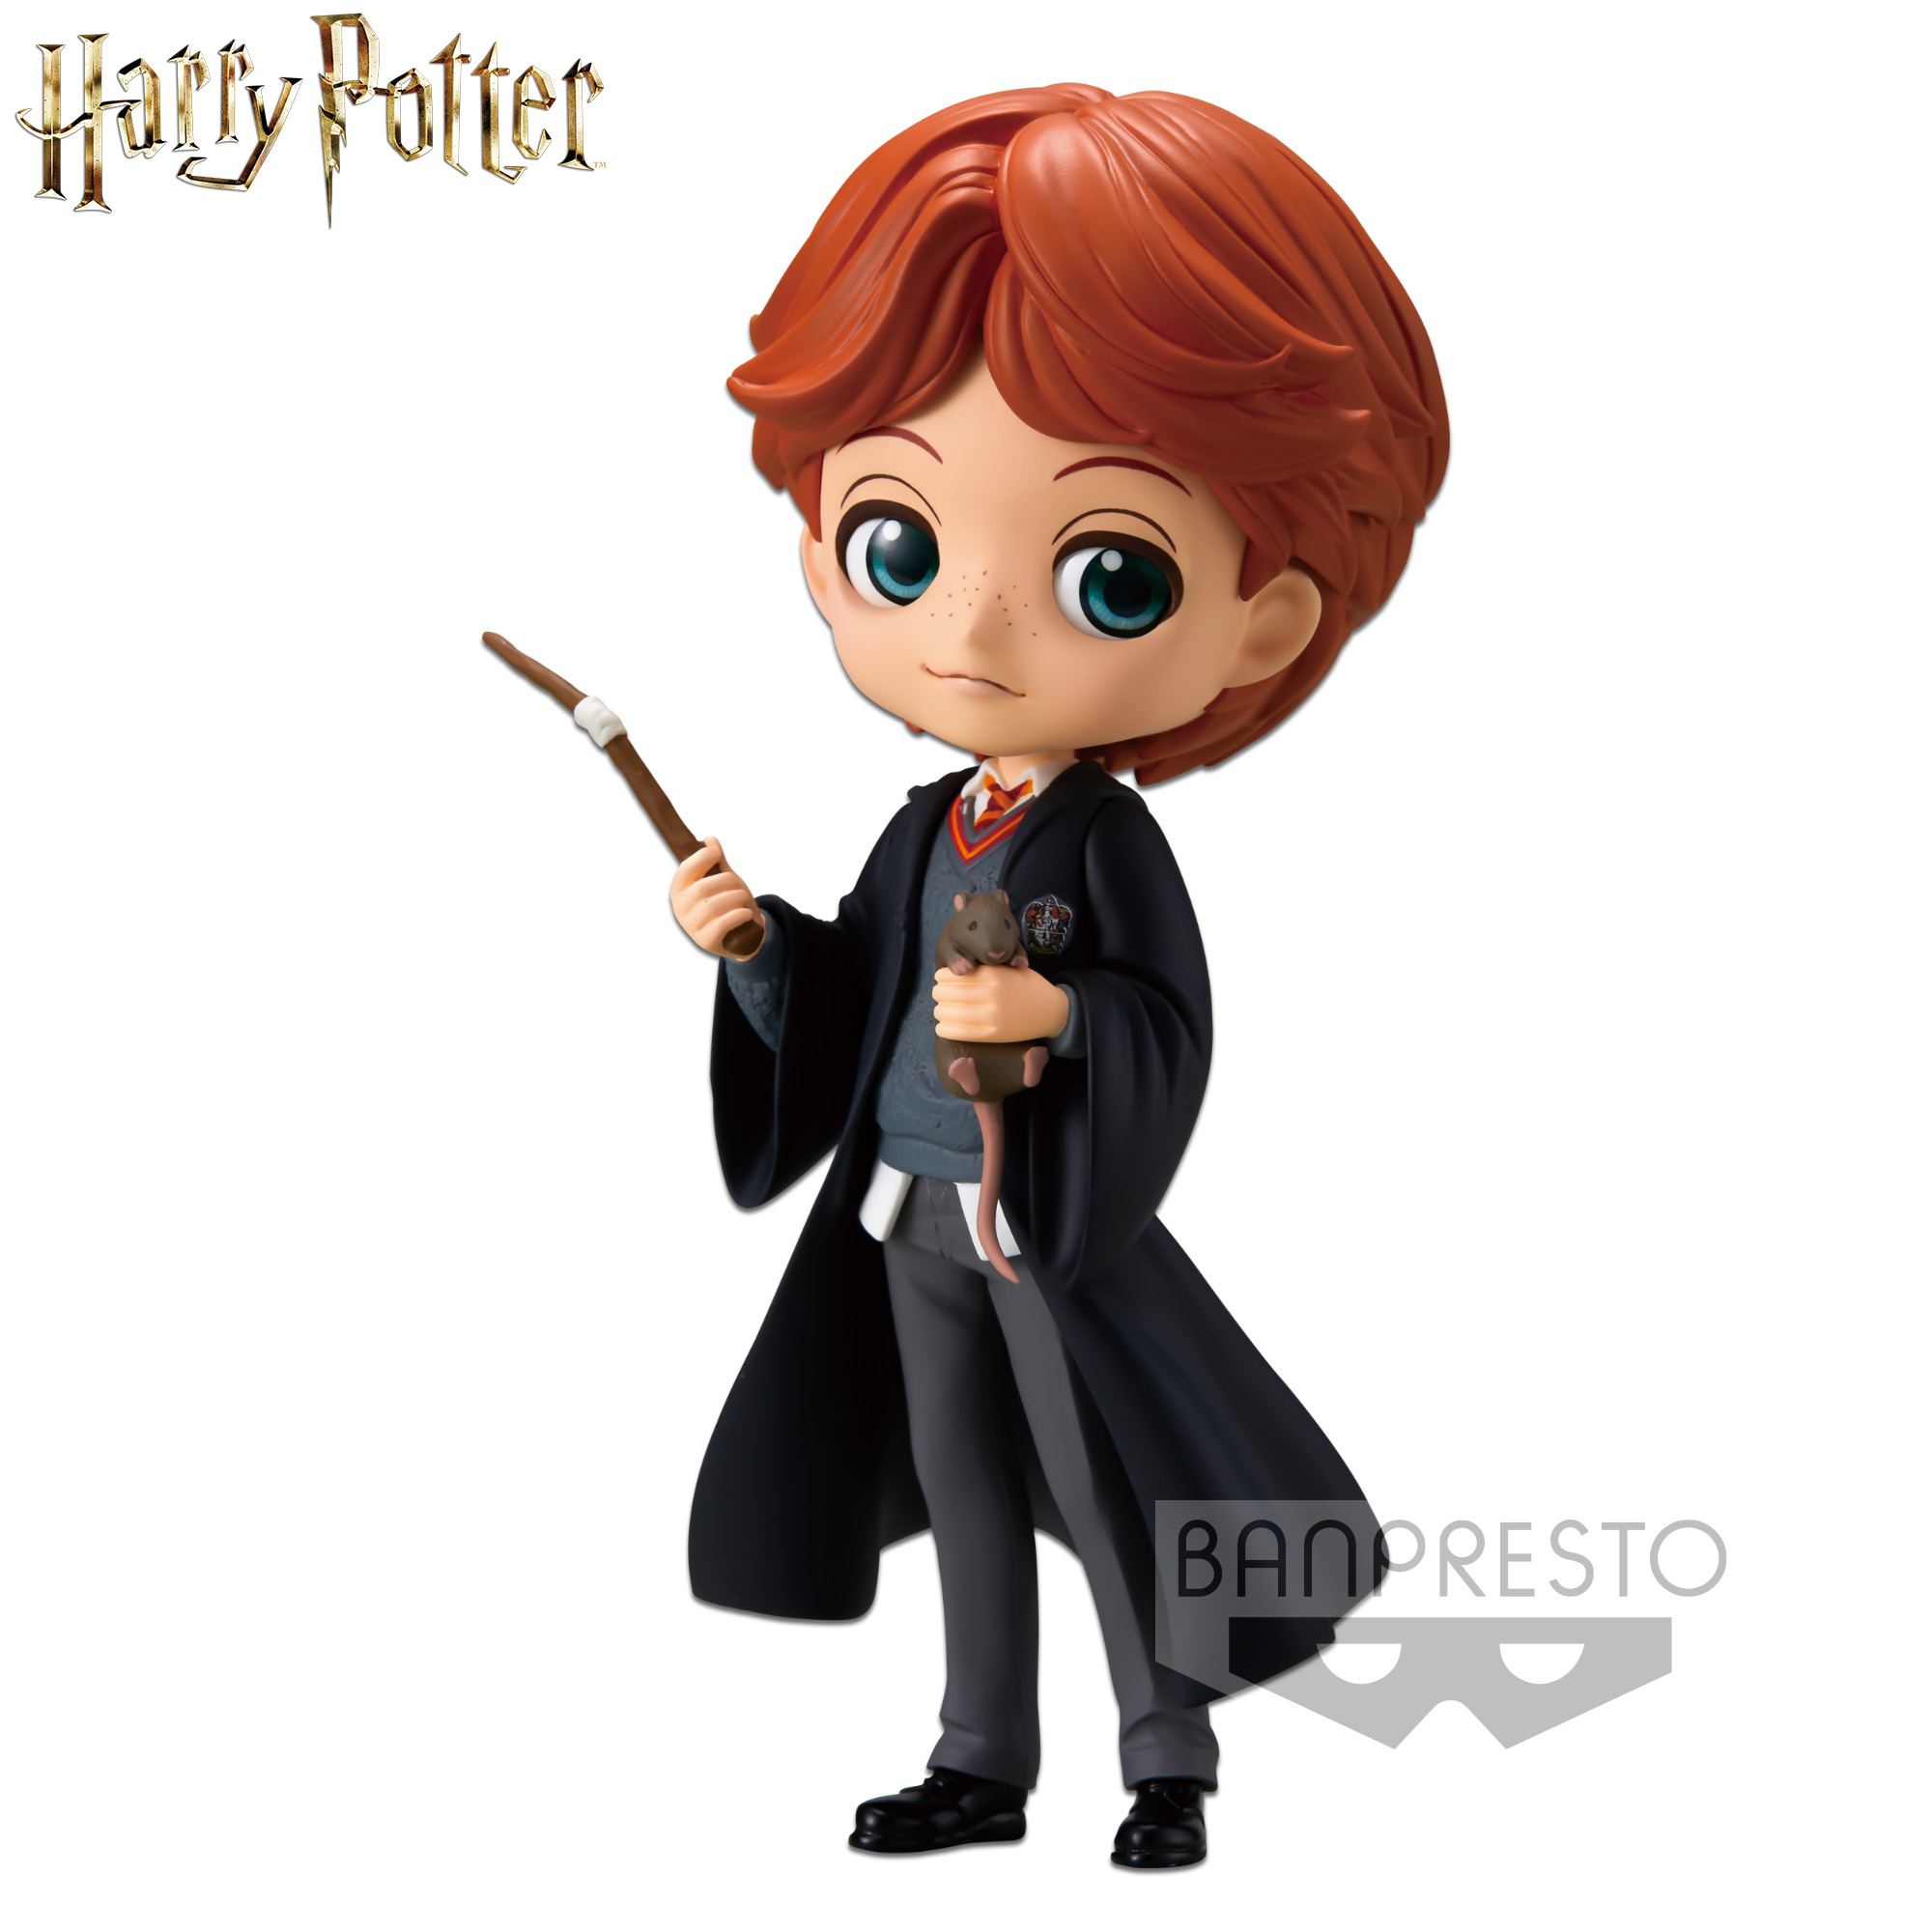 Banpresto Harry Potter Q posket Harry Potter 2 Figure Figurine 14cm Pearl color 